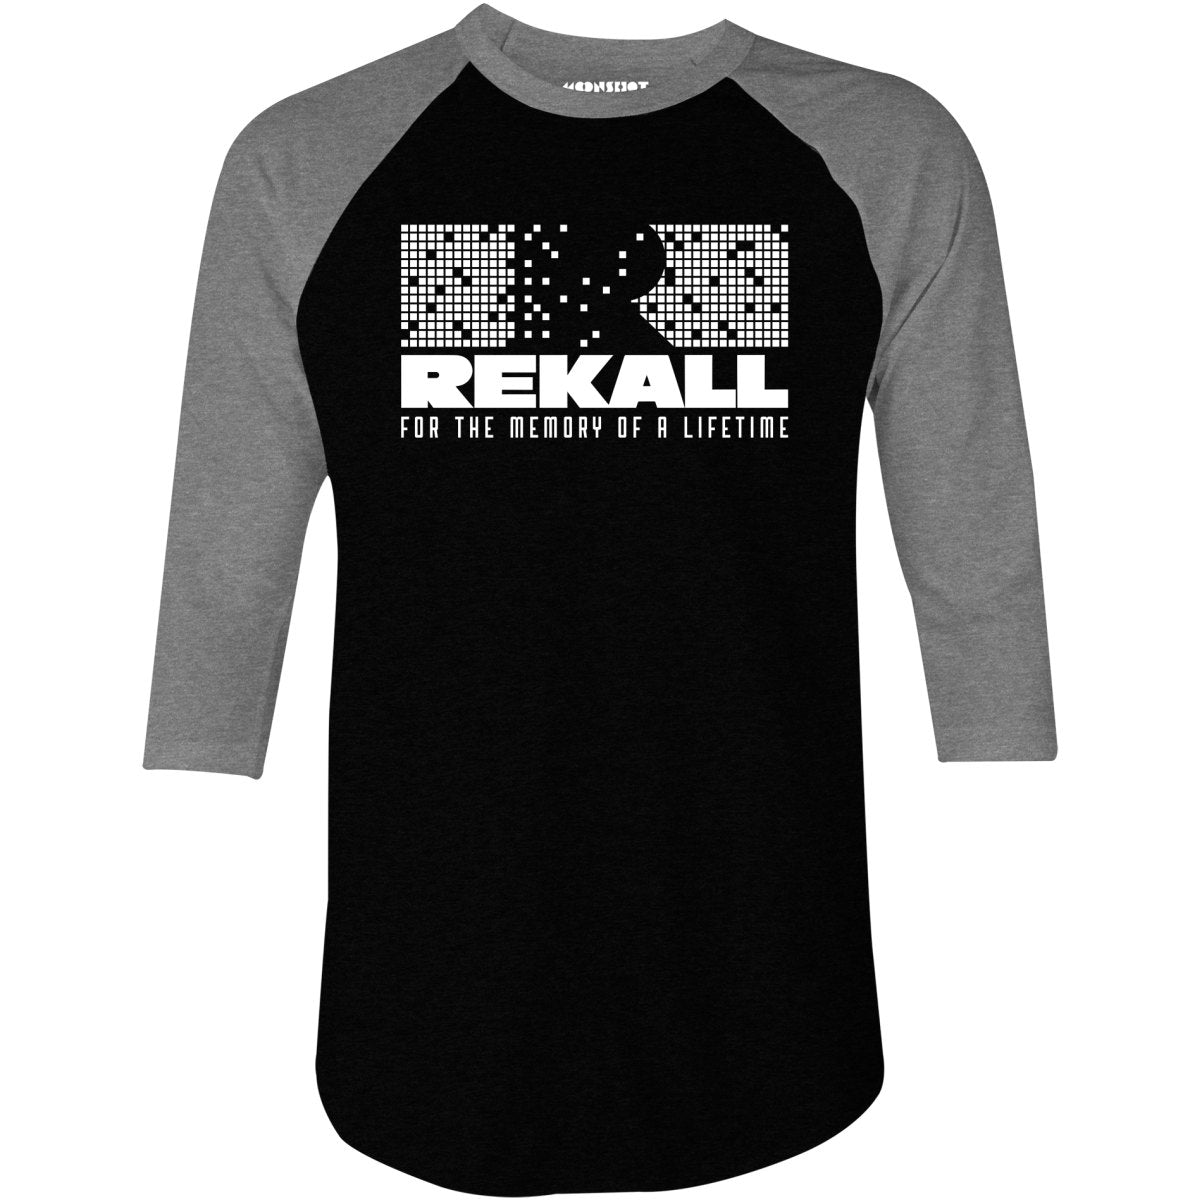 Rekall - Total Recall - 3/4 Sleeve Raglan T-Shirt